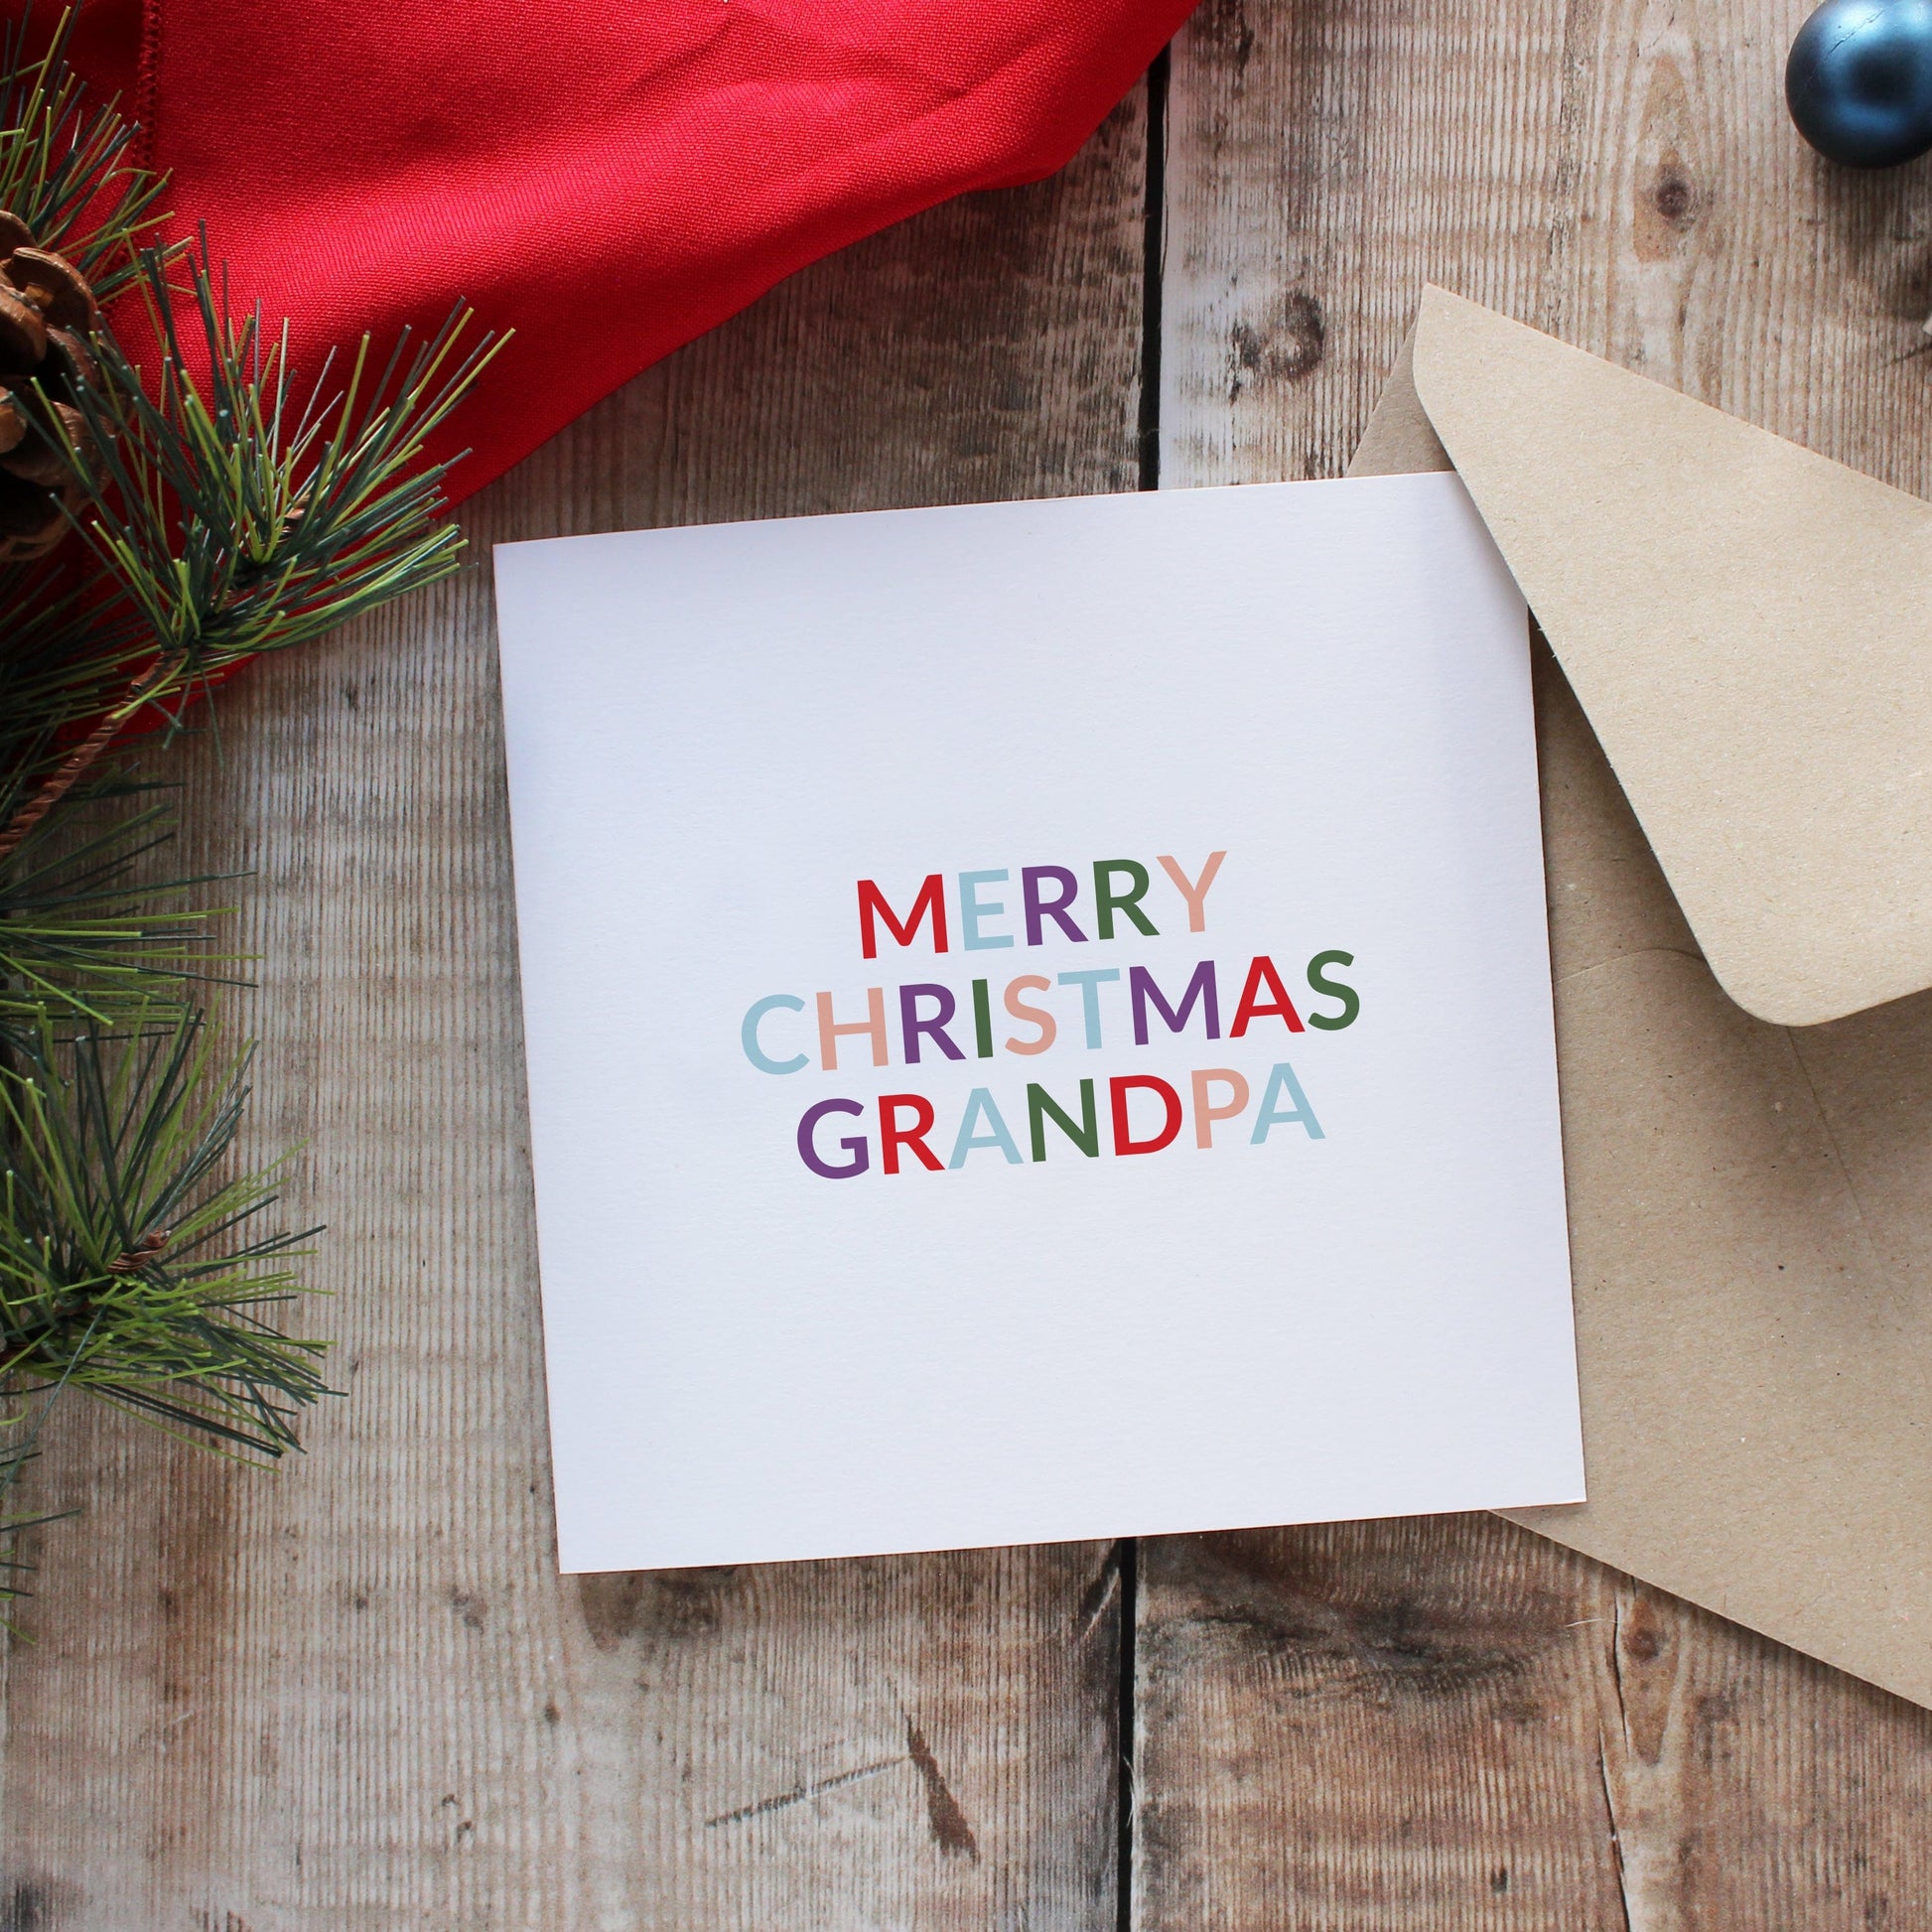 Merry Christmas grandpa Christmas card from Purple Tree Designs